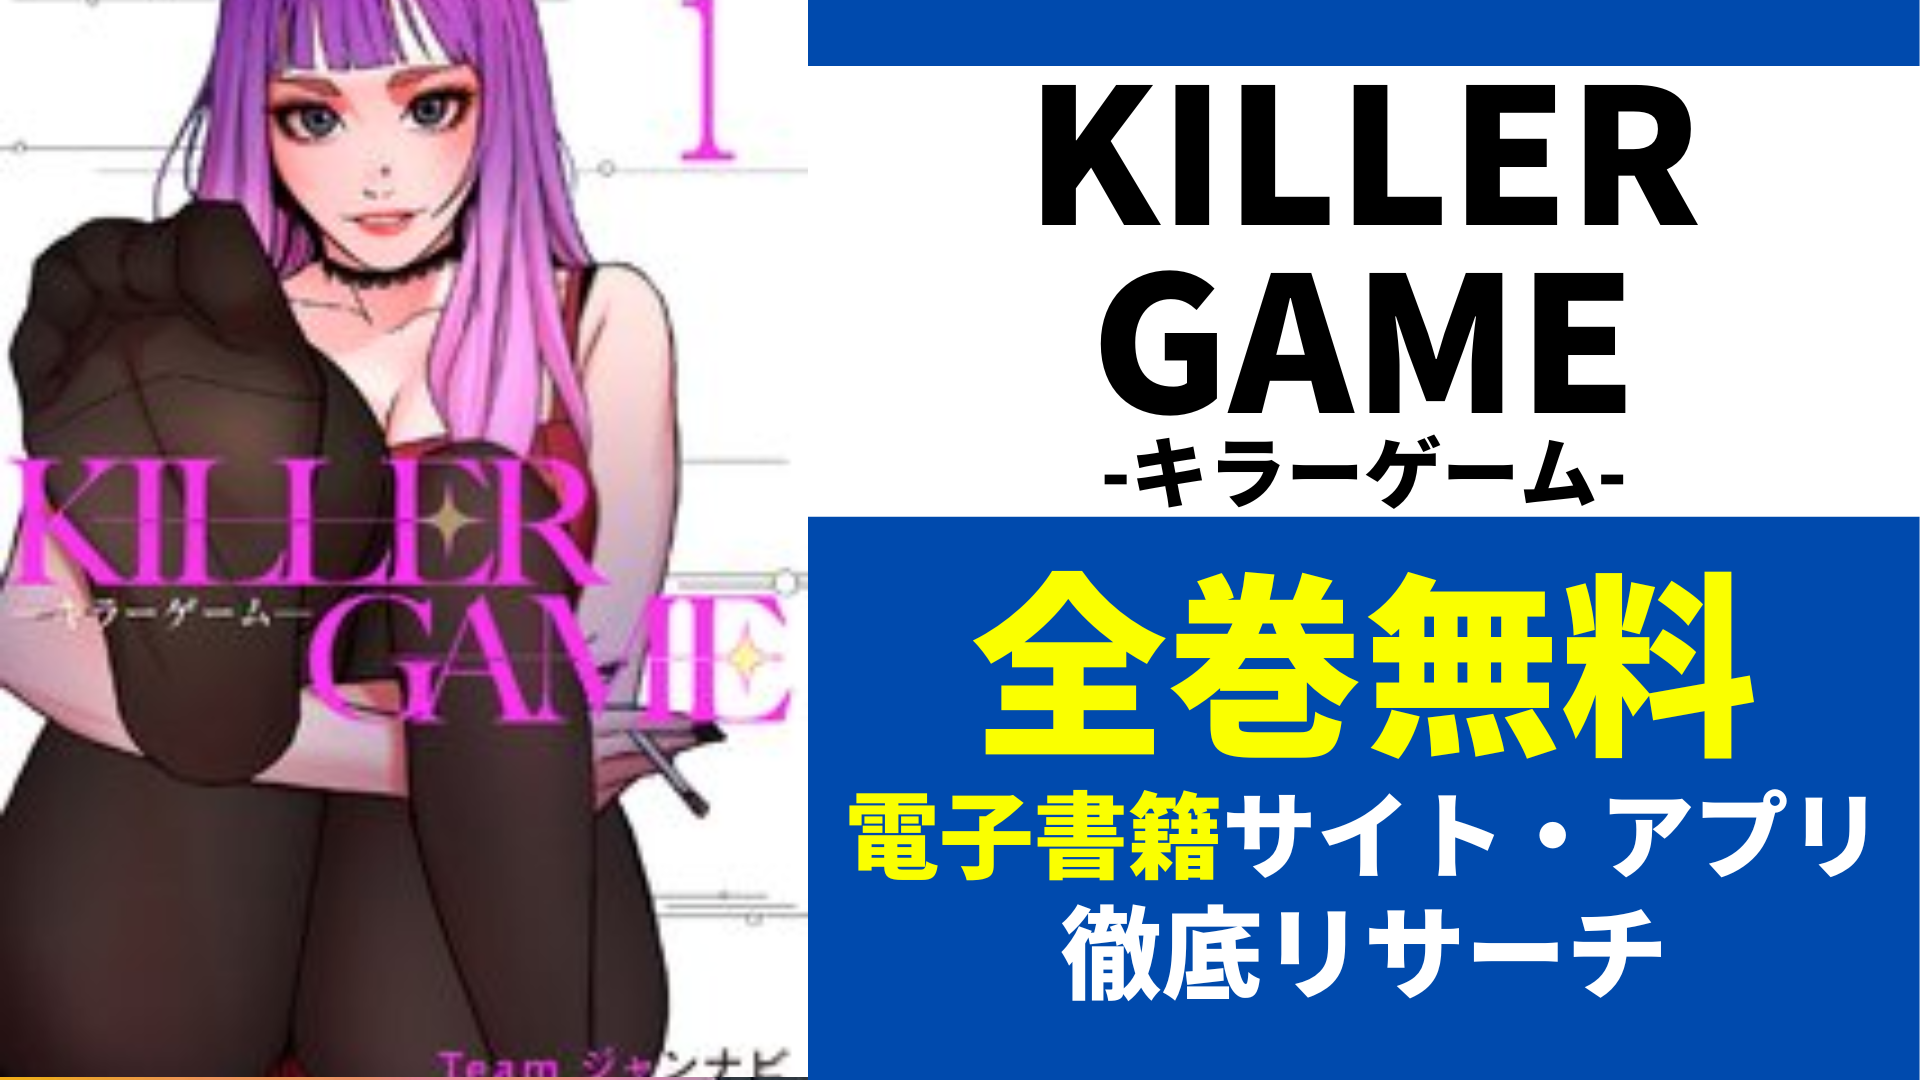 KILLER GAME-キラーゲーム-を全巻無料で読むサイト・アプリを紹介